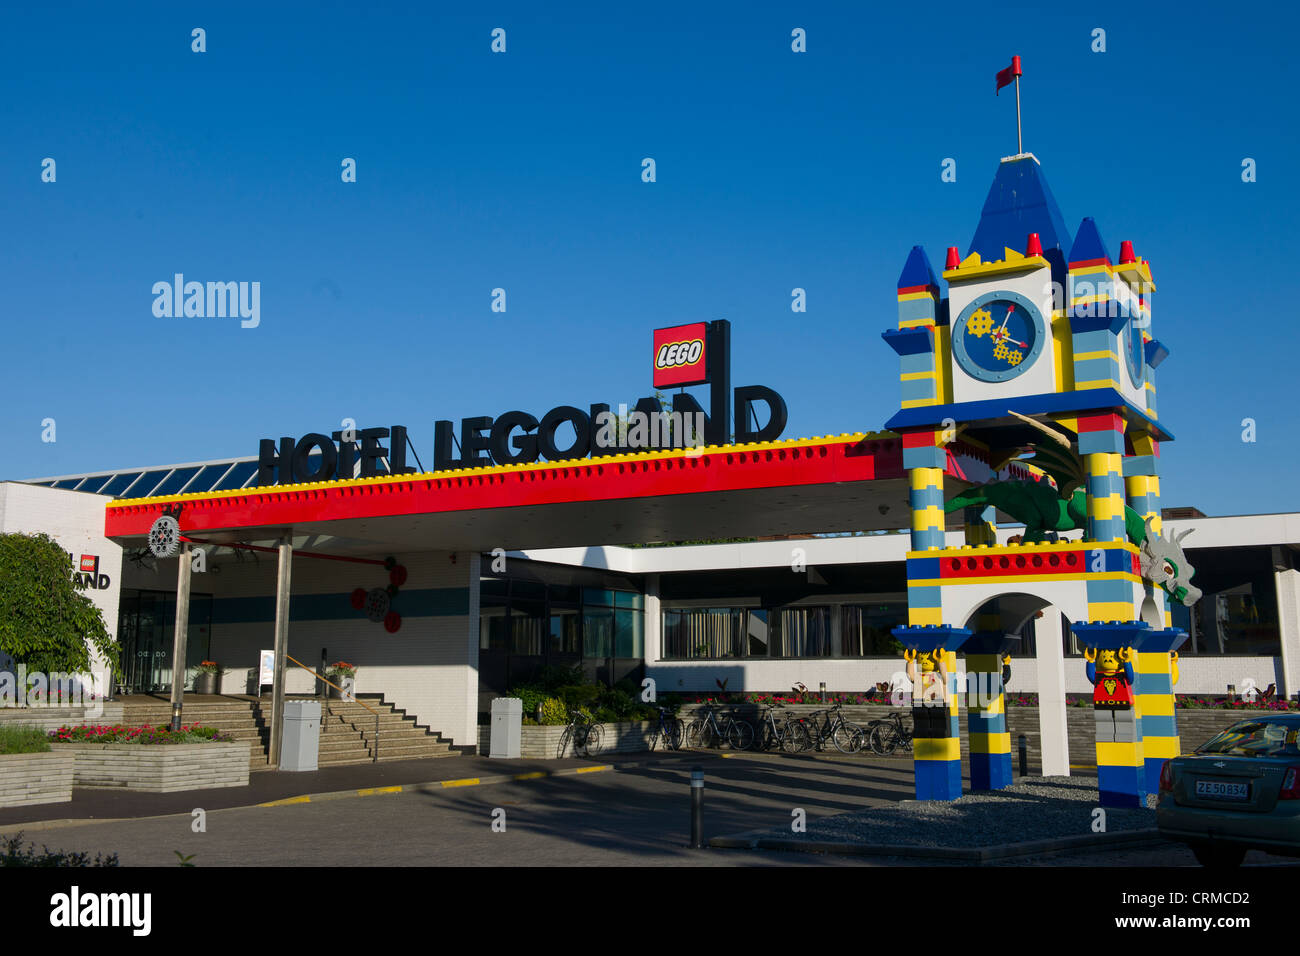 Sign outside of the Hotel Legoland, Billund, Denmark Stock Photo - Alamy